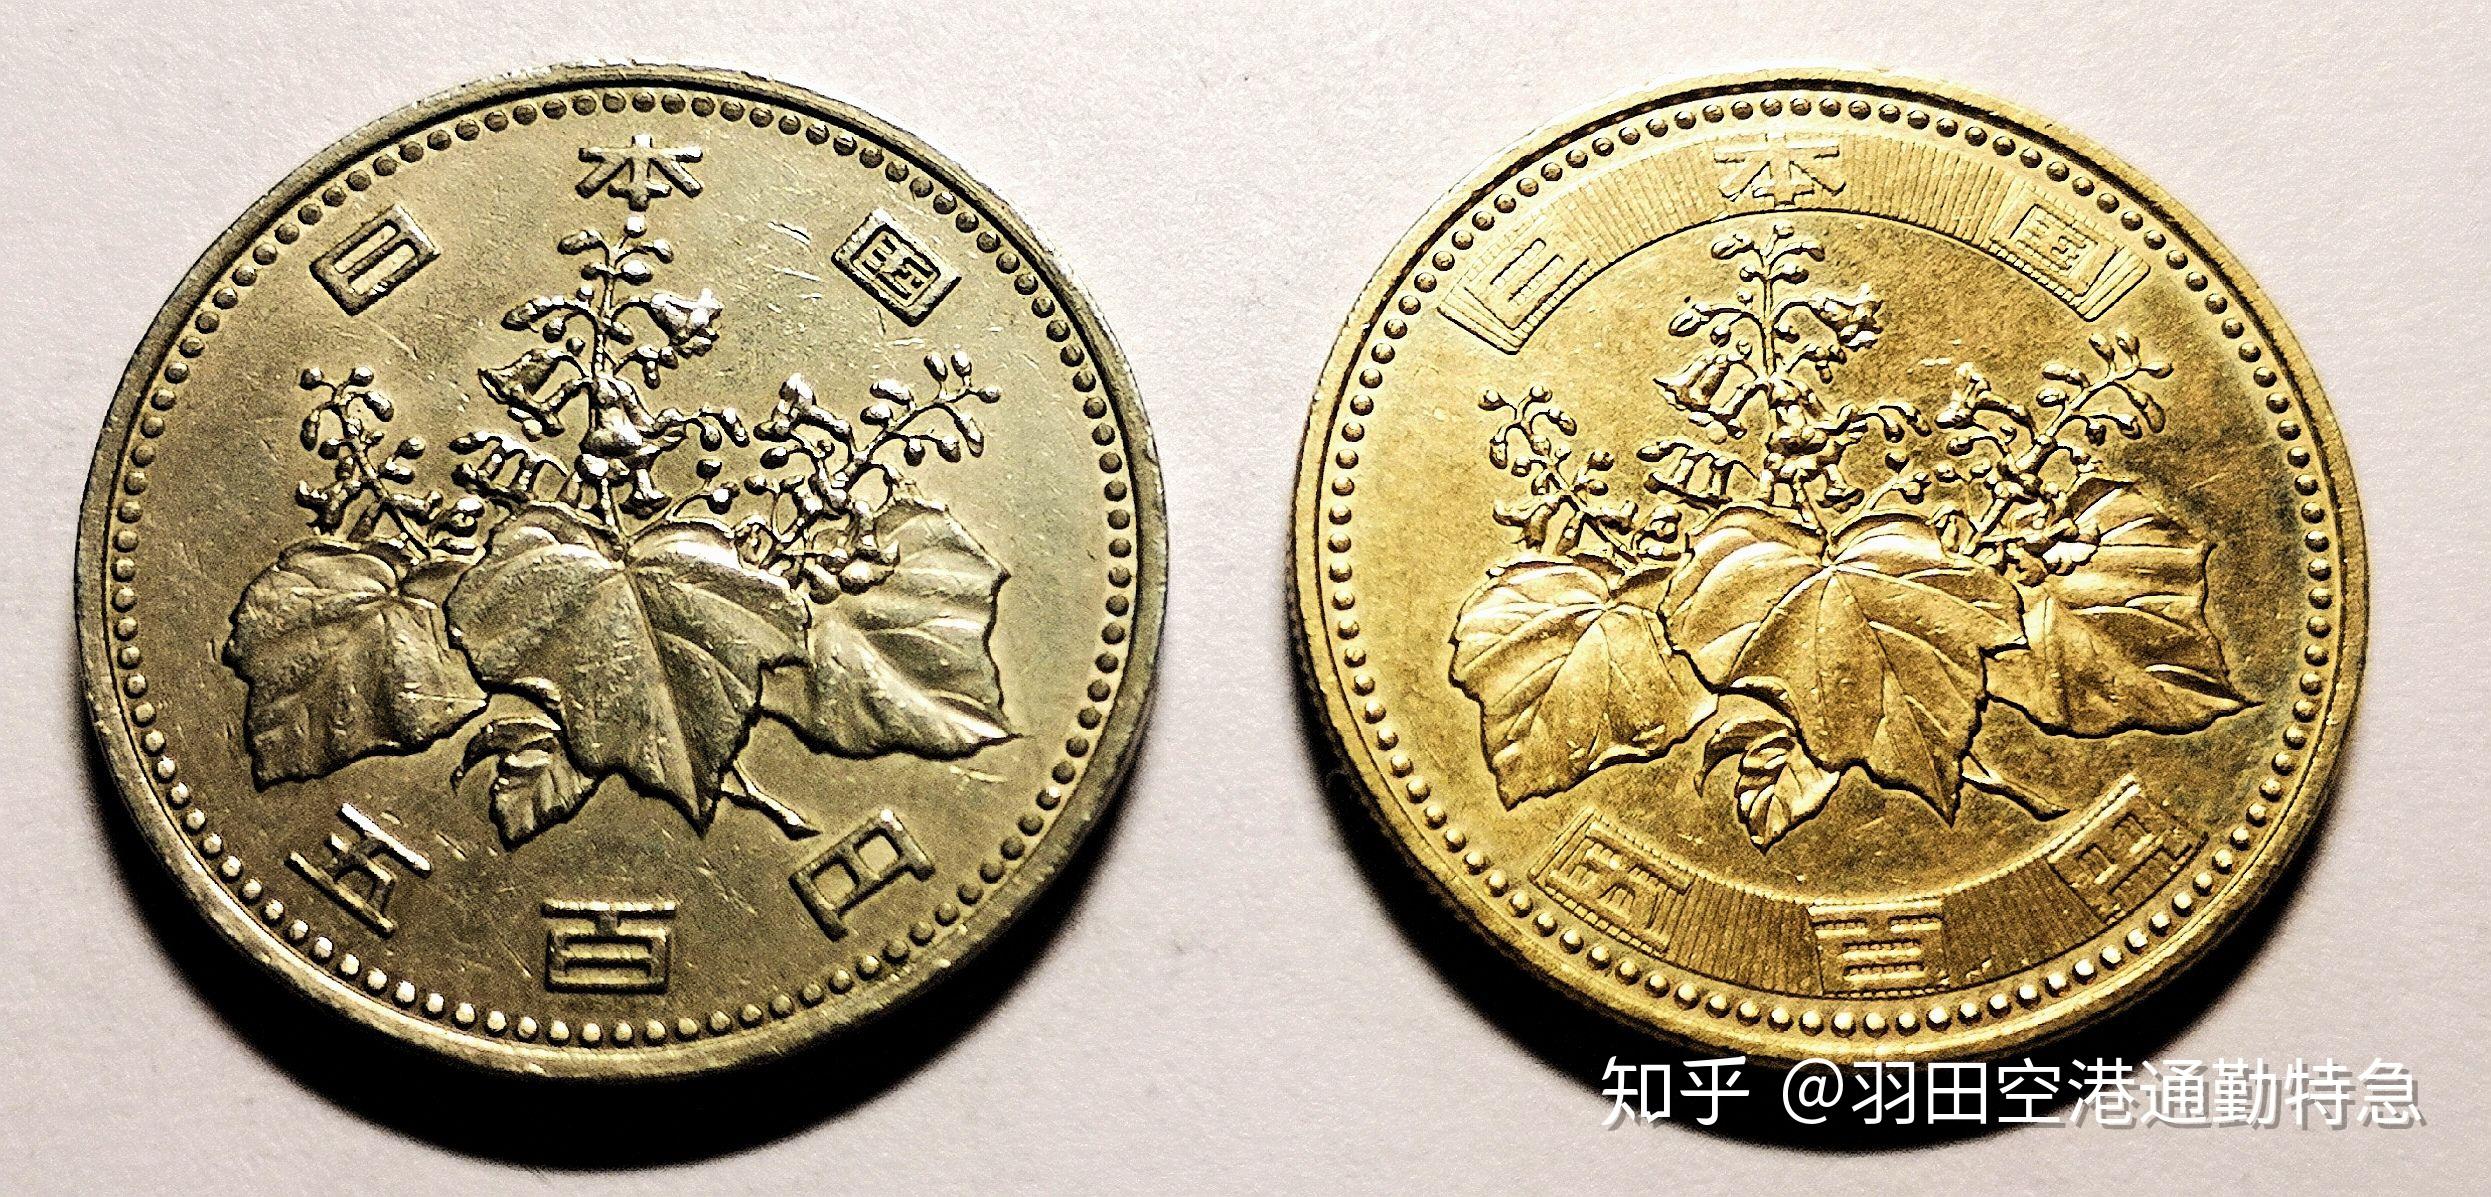 記念貨幣 1990年 平成二年 日本平成天皇陛下御即位記念10万円金貨ゴールドコイン NGC PF70 ULTRA CAMEO 重30g最高 ...